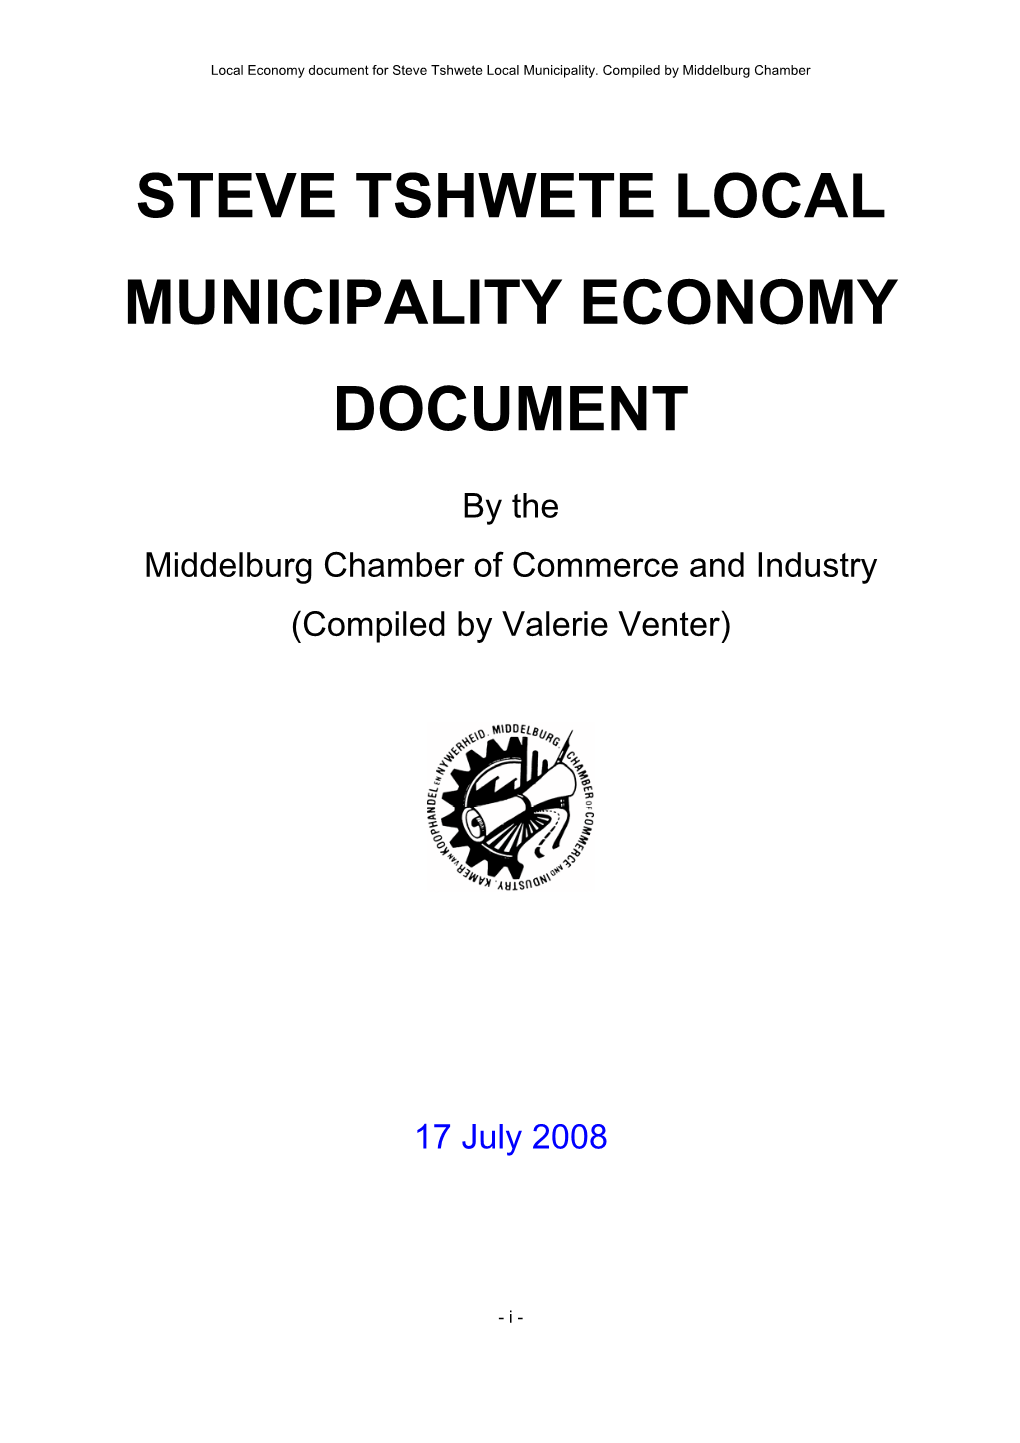 Steve Tshwete Local Municipality Economy Document